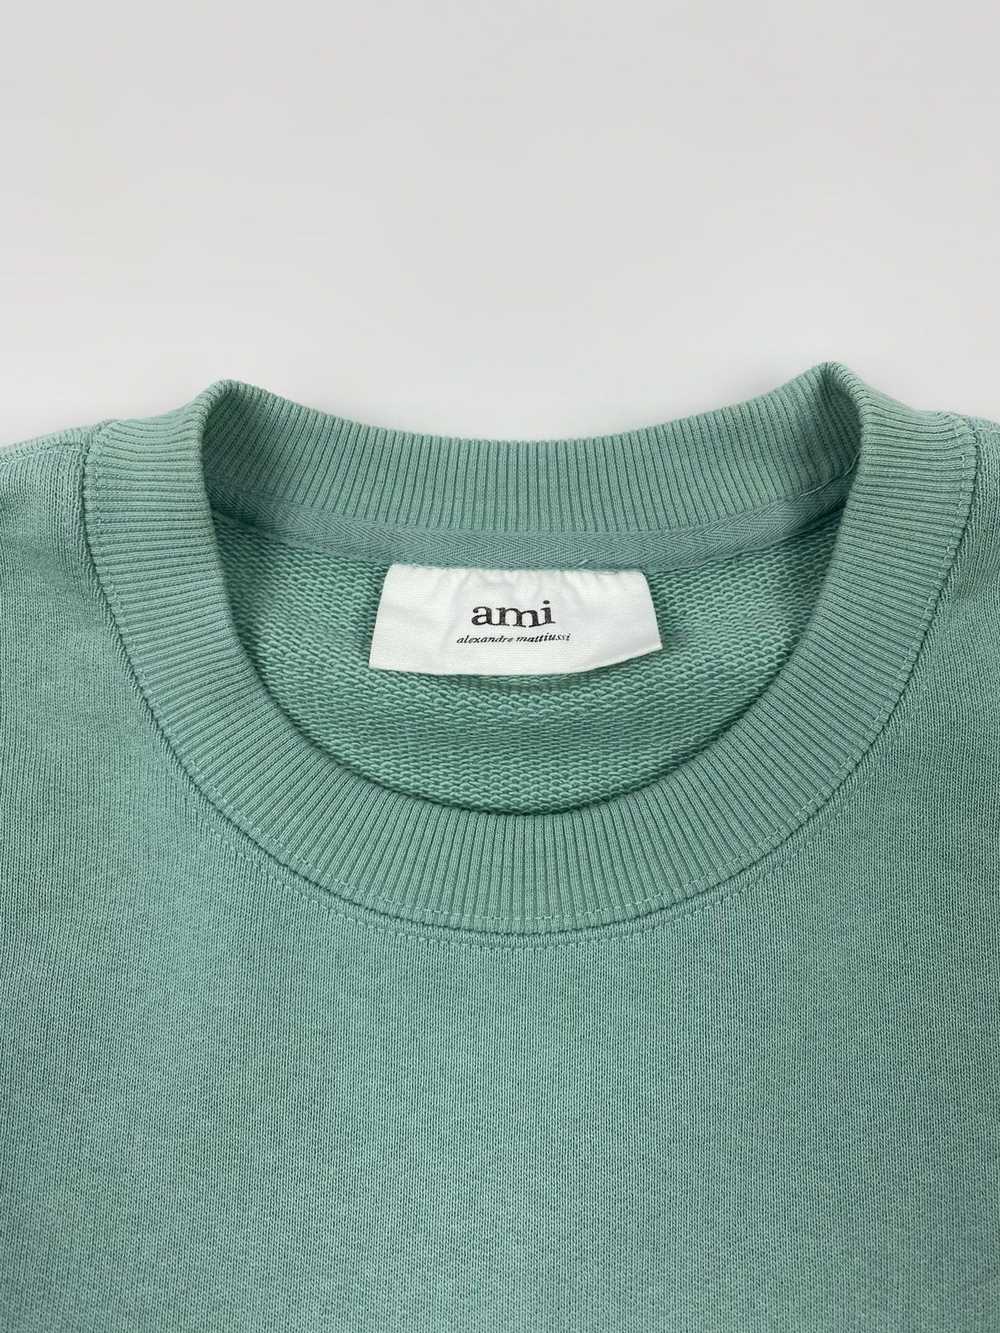 AMI AMI De Coeur Aqua Green Logo Boxy Sweatshirt - image 3